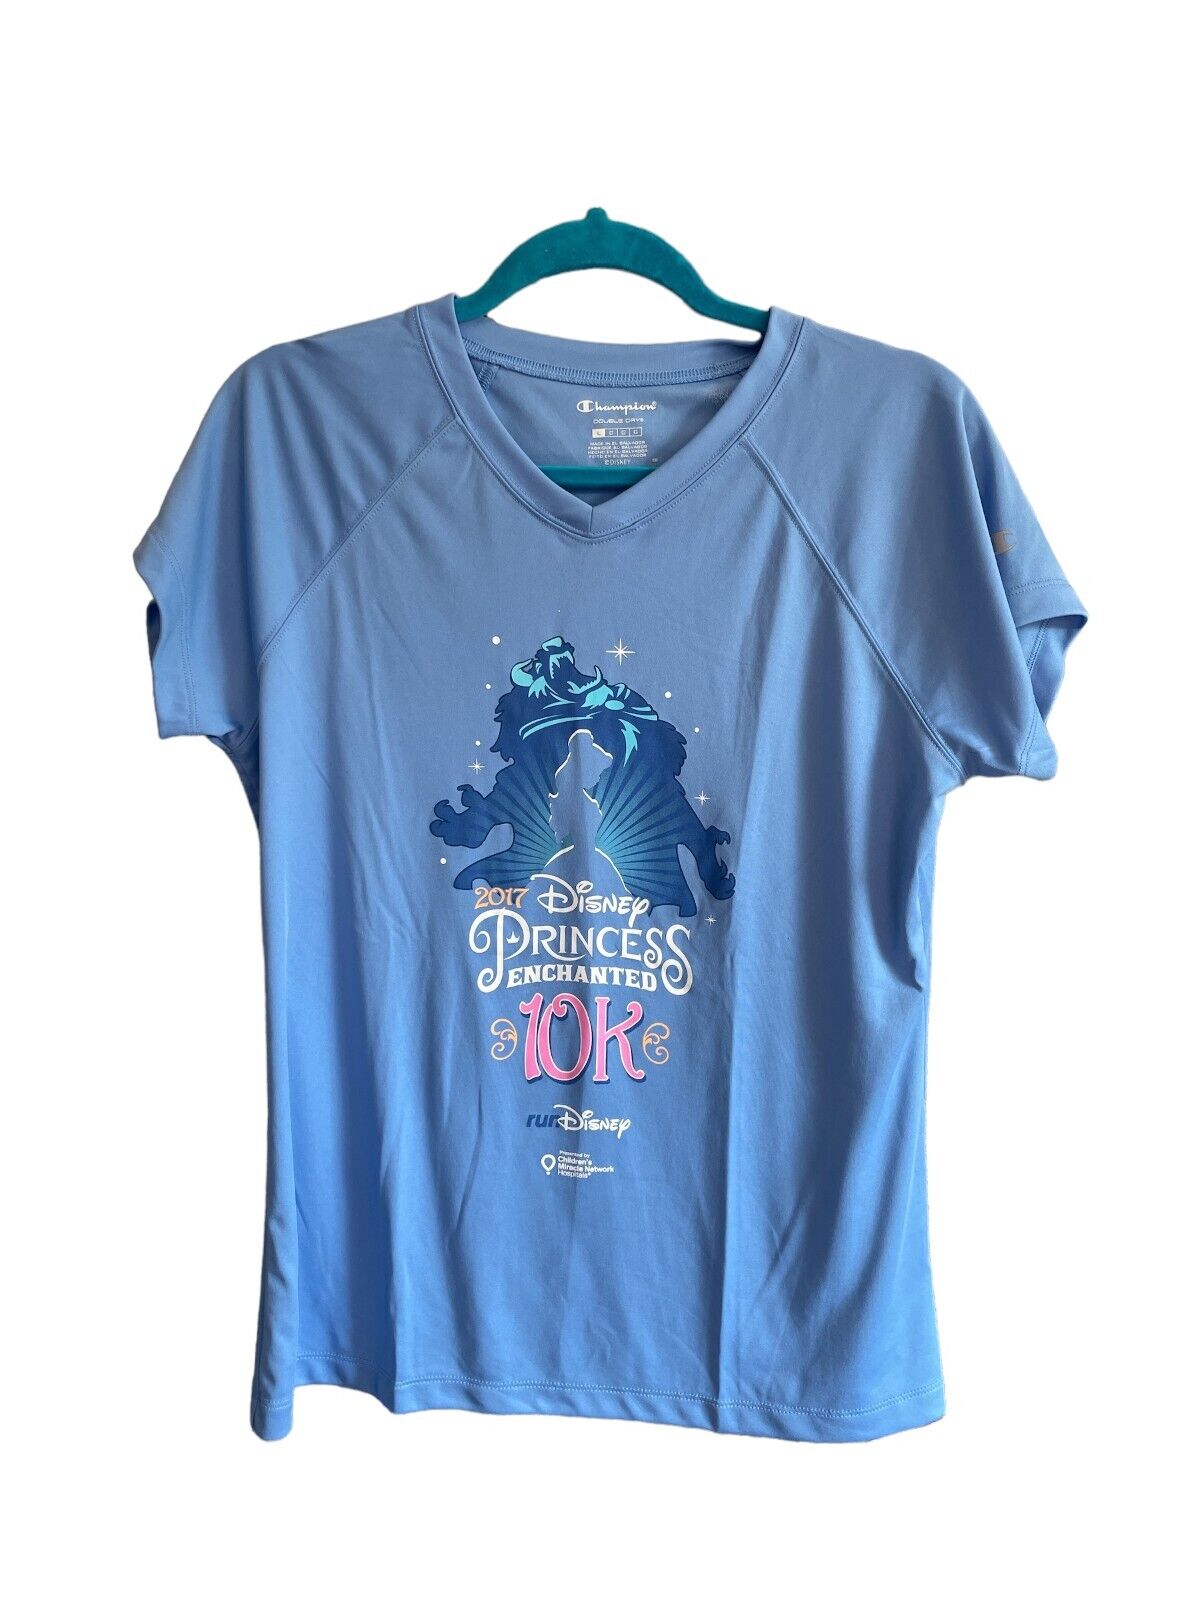 Run Disney 2017 Disney Princess Enchanted 10K Marathon Blue SS Shirt Size L